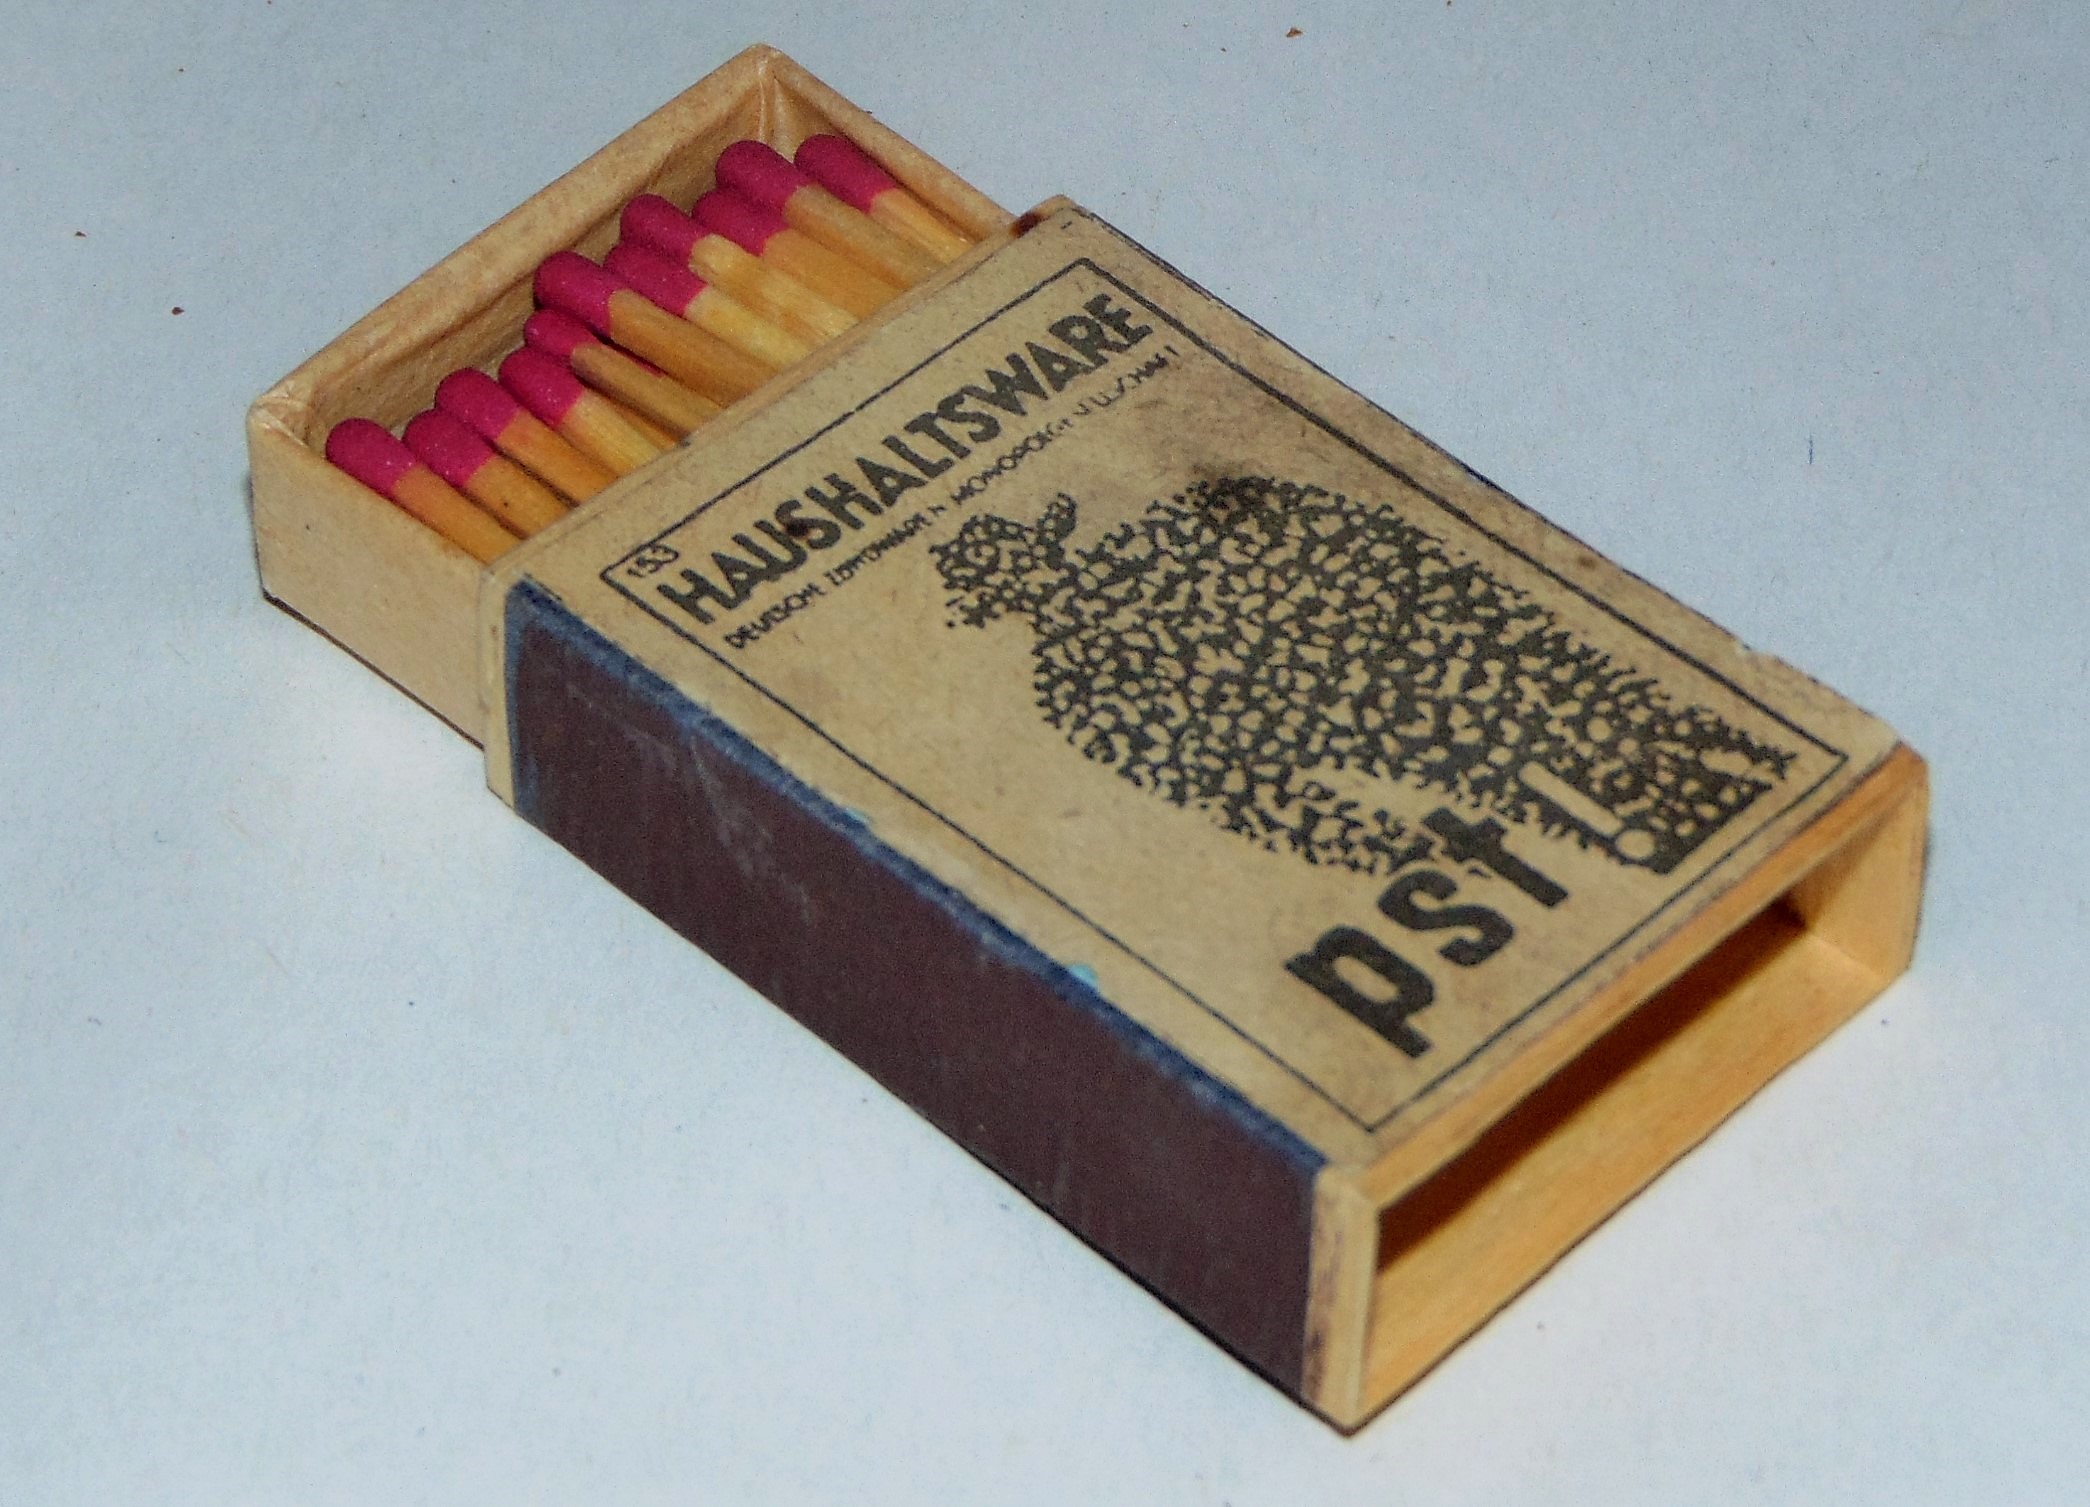 File:Box of matches, German, 1940s.JPG - Wikimedia Commons